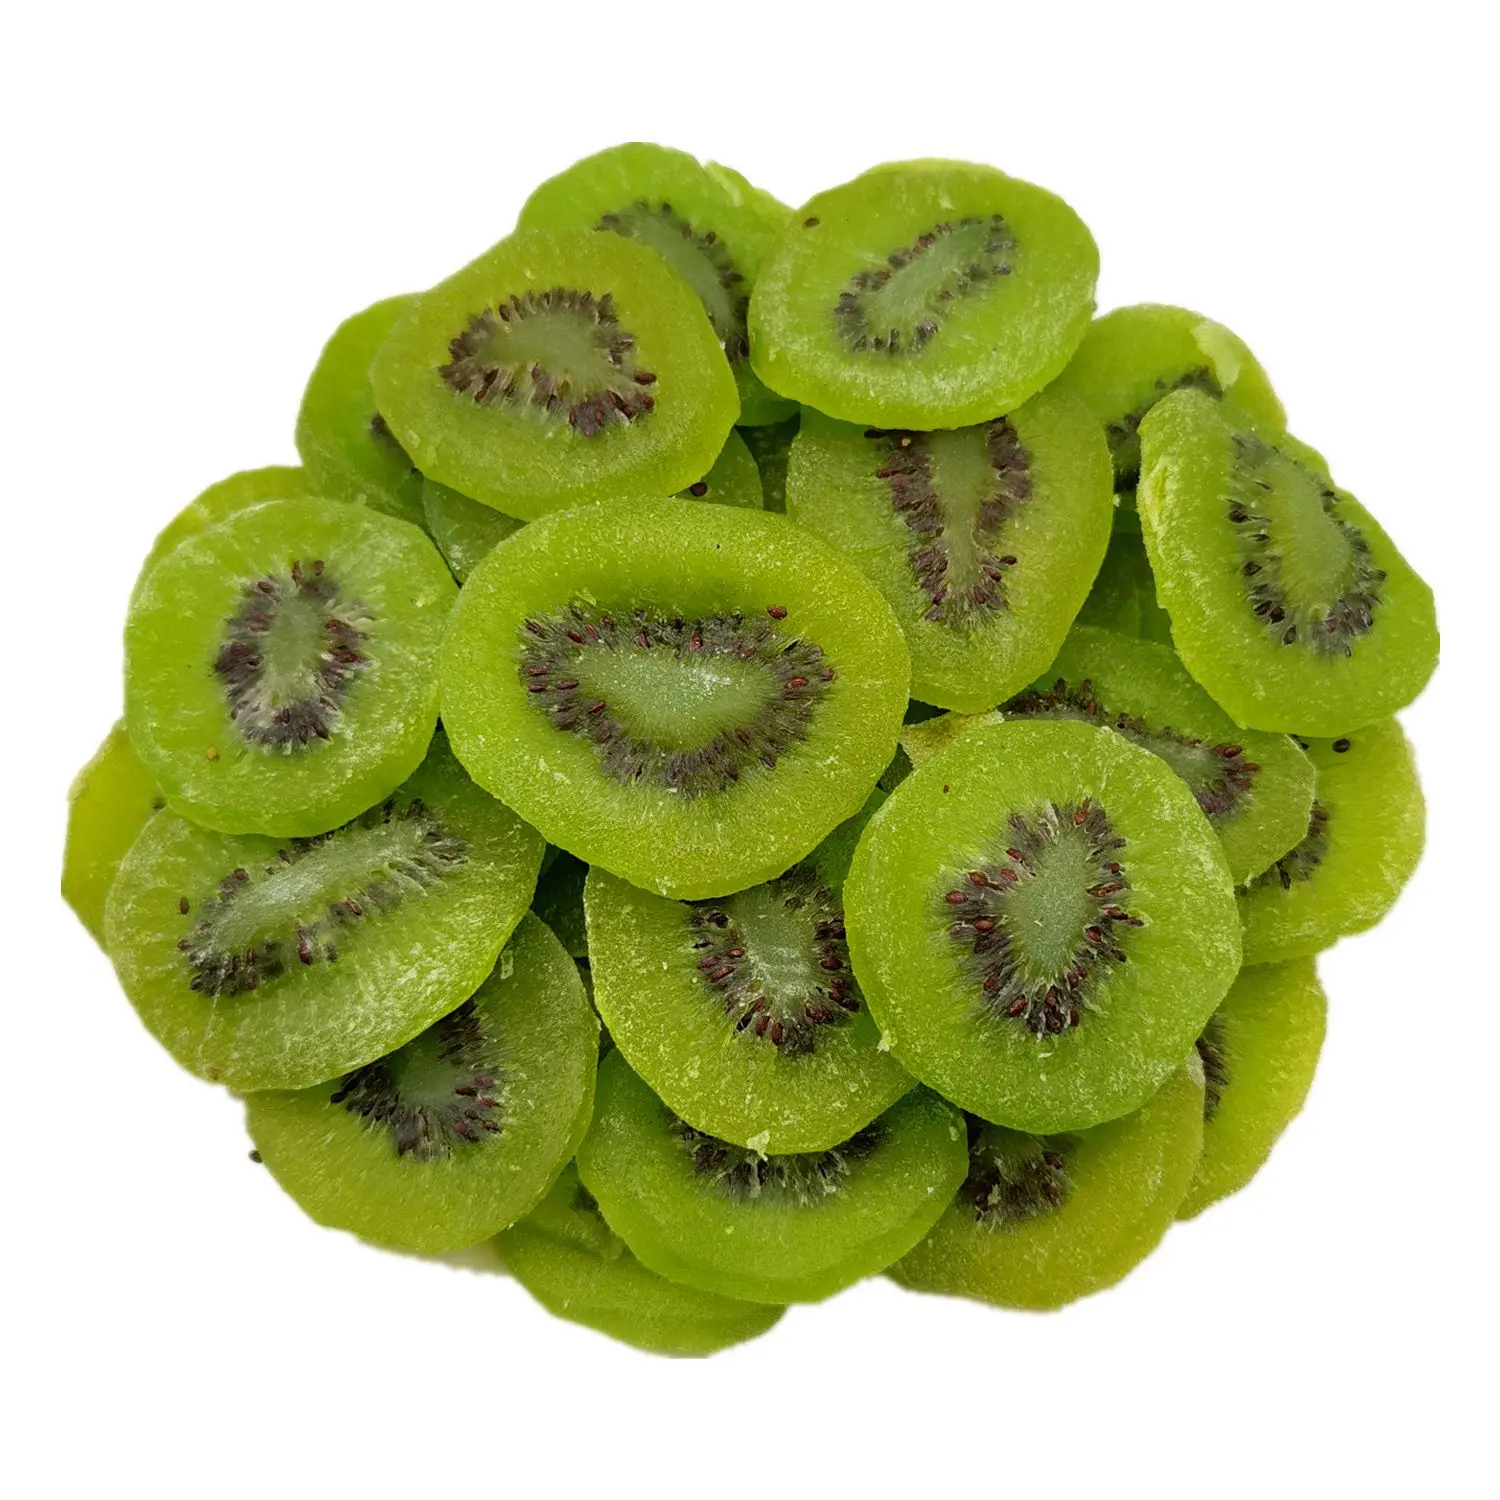 Rind Snacks Organic Unsweetened Kiwi Dried Fruit Dried Kiwi